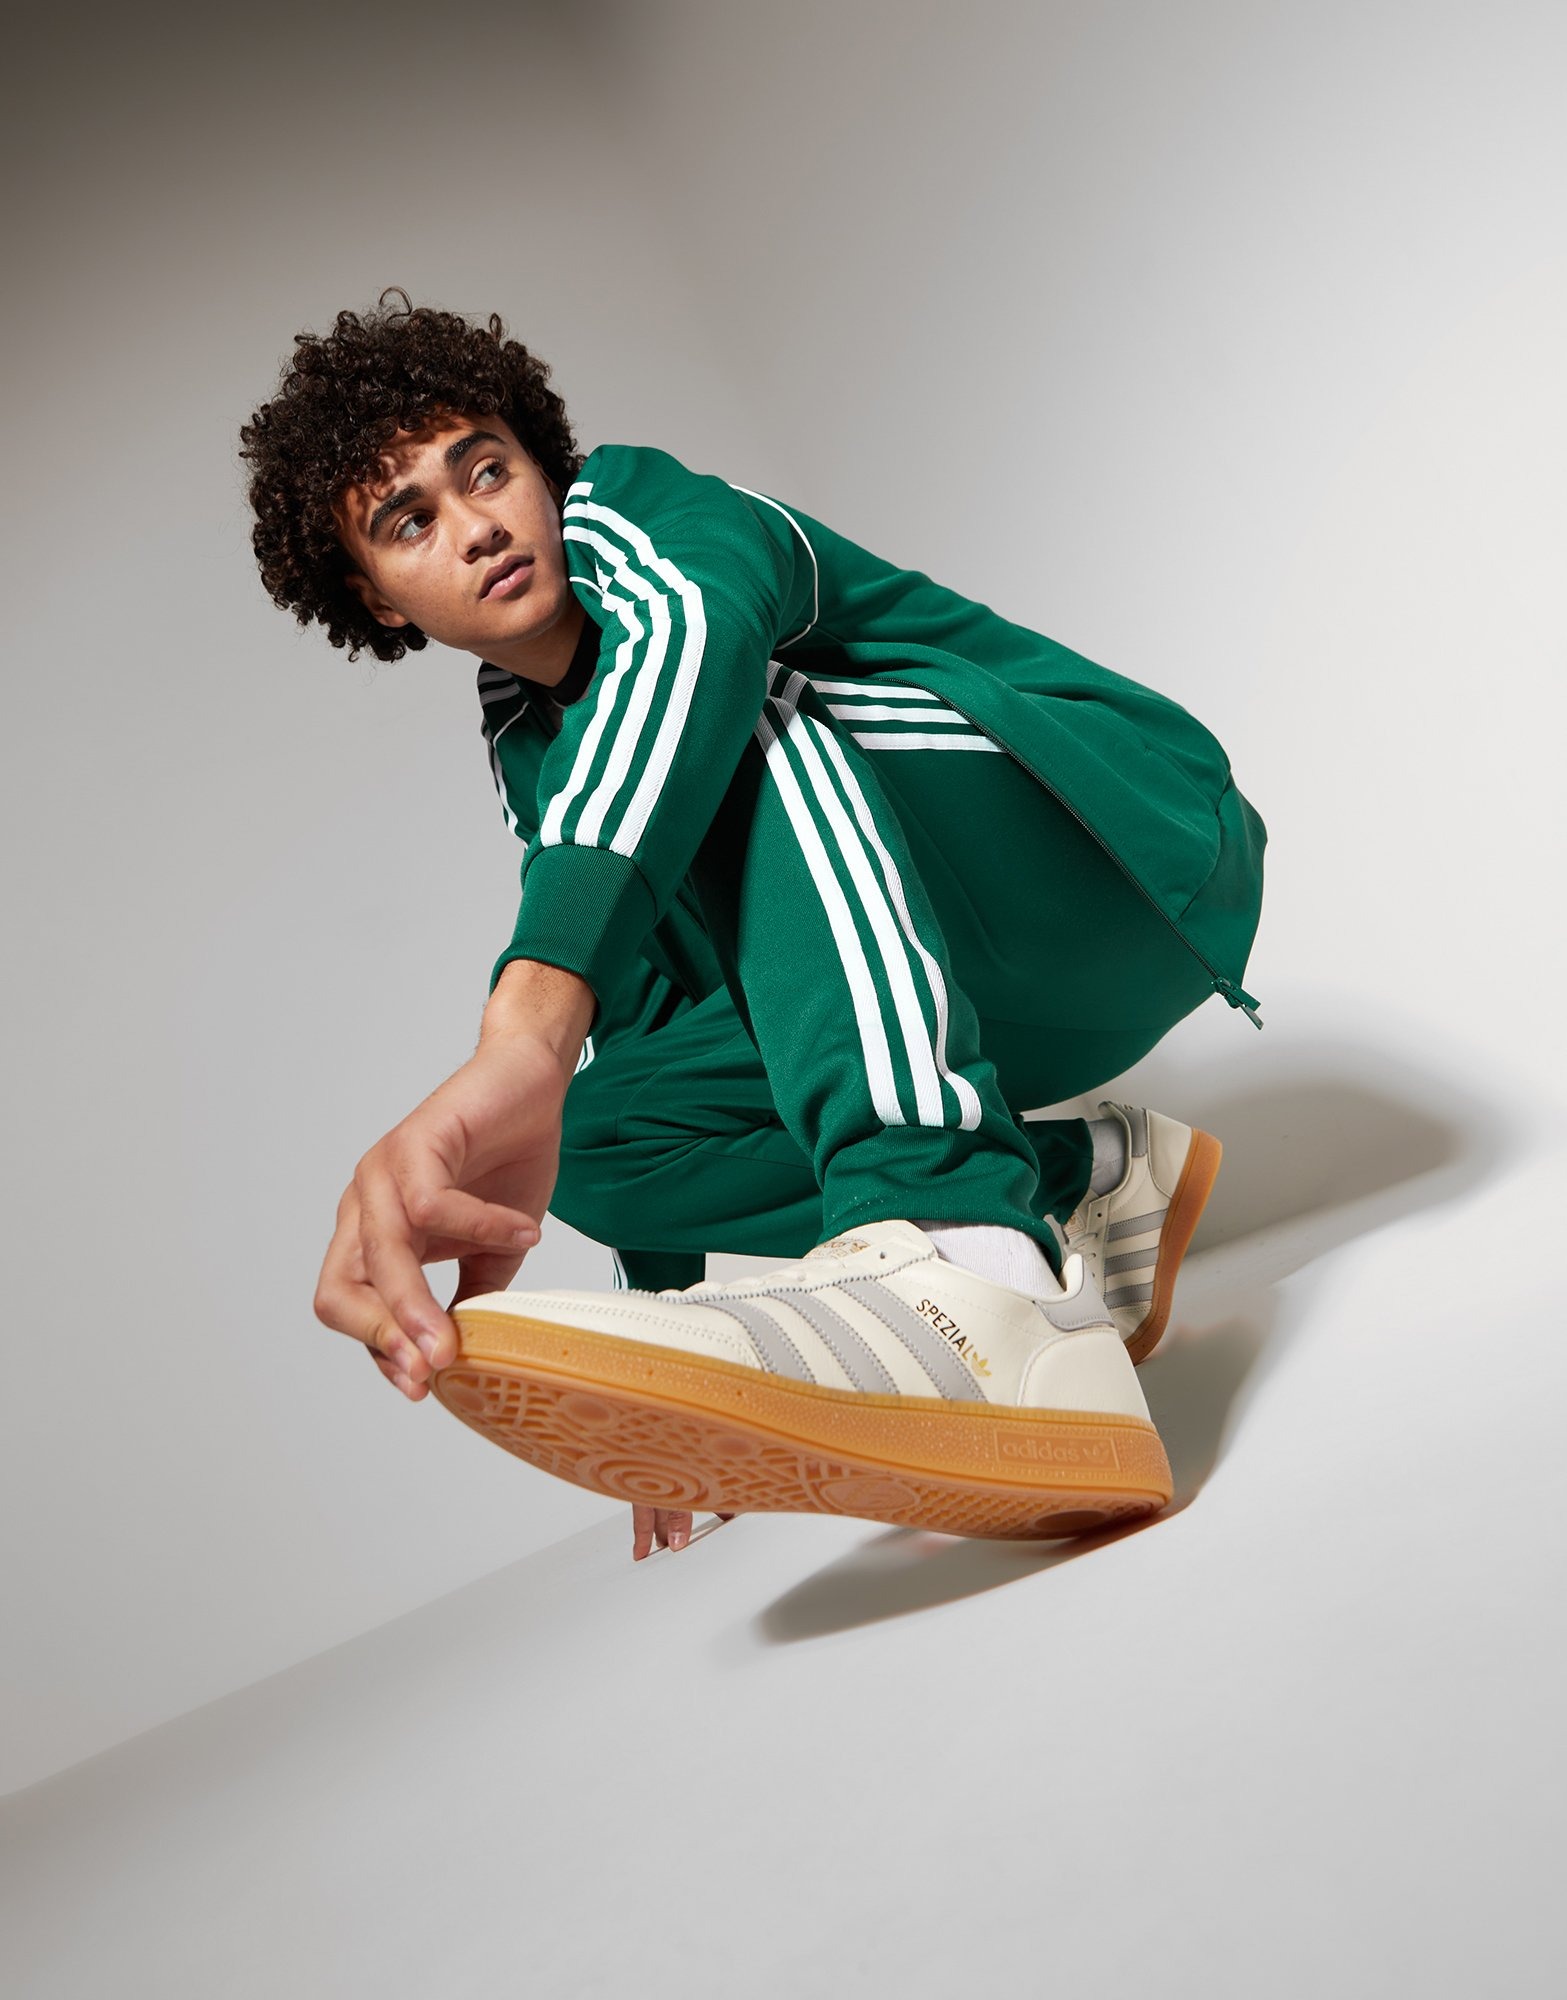 Green adidas Originals SST Track Pants | JD Sports UK